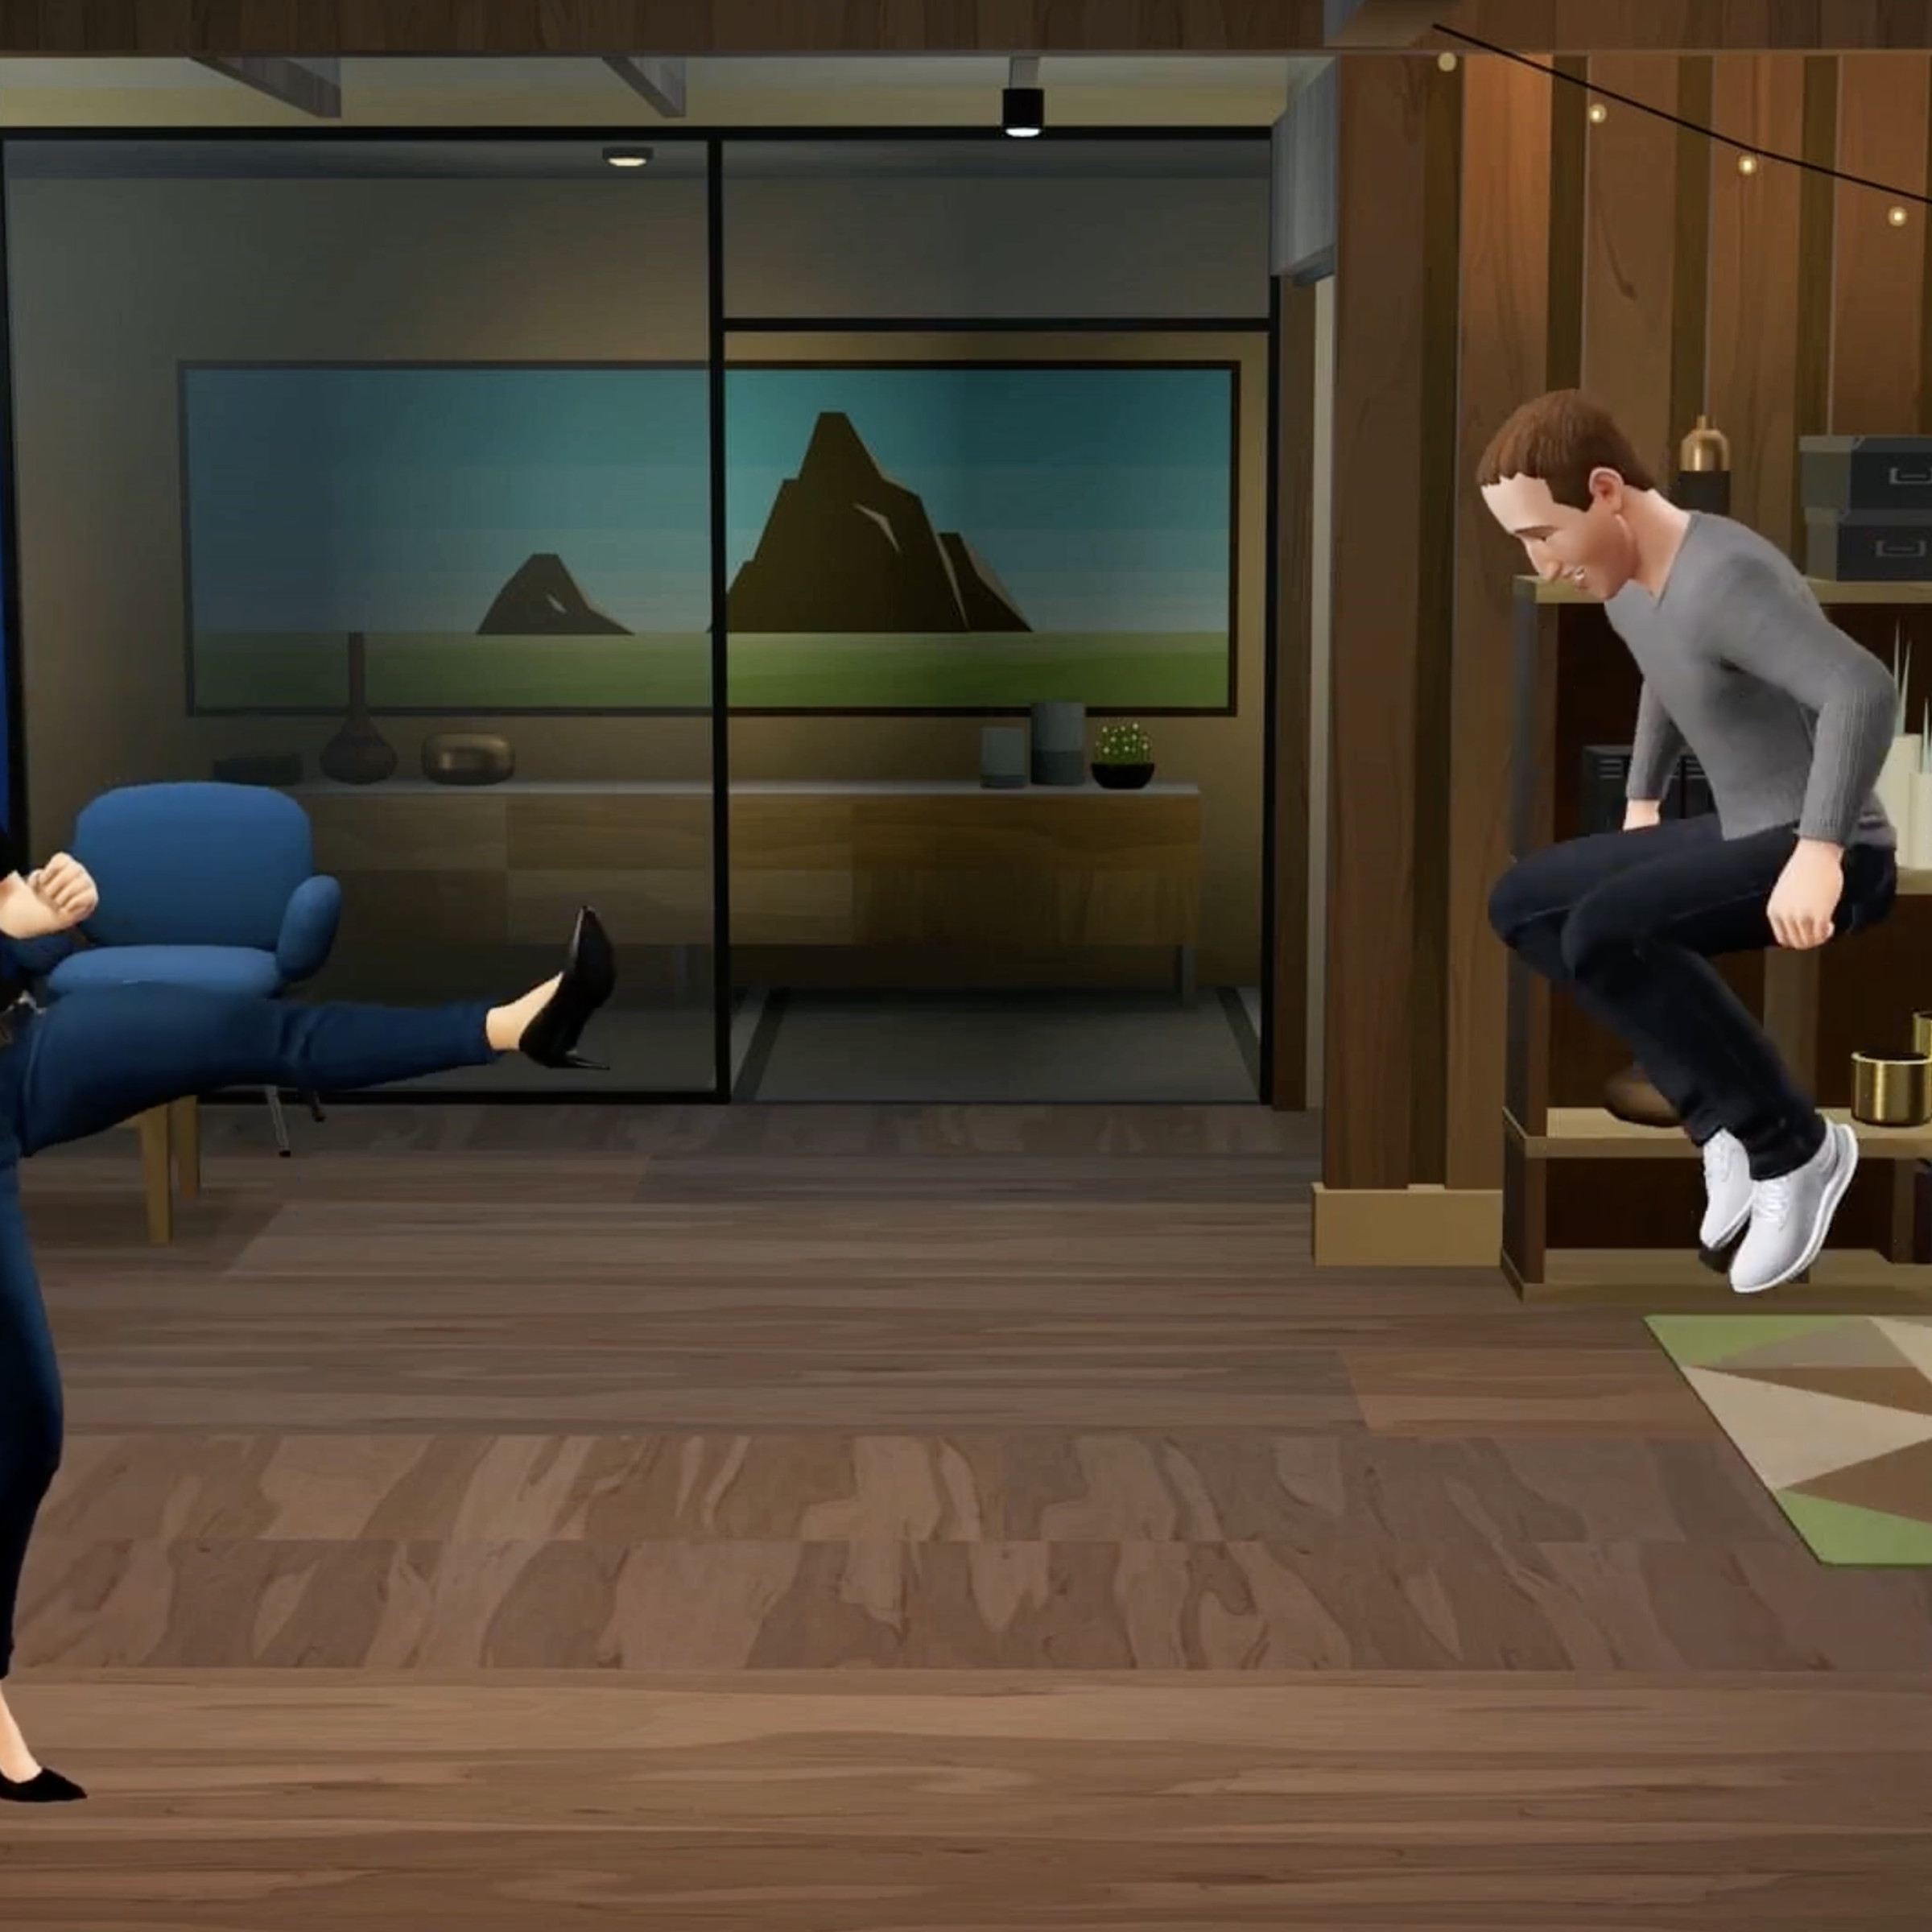 Screenshot of Mark Zuckerberg’s digital avatar jumping, while Aigerim Shorman’s avatar kicks.